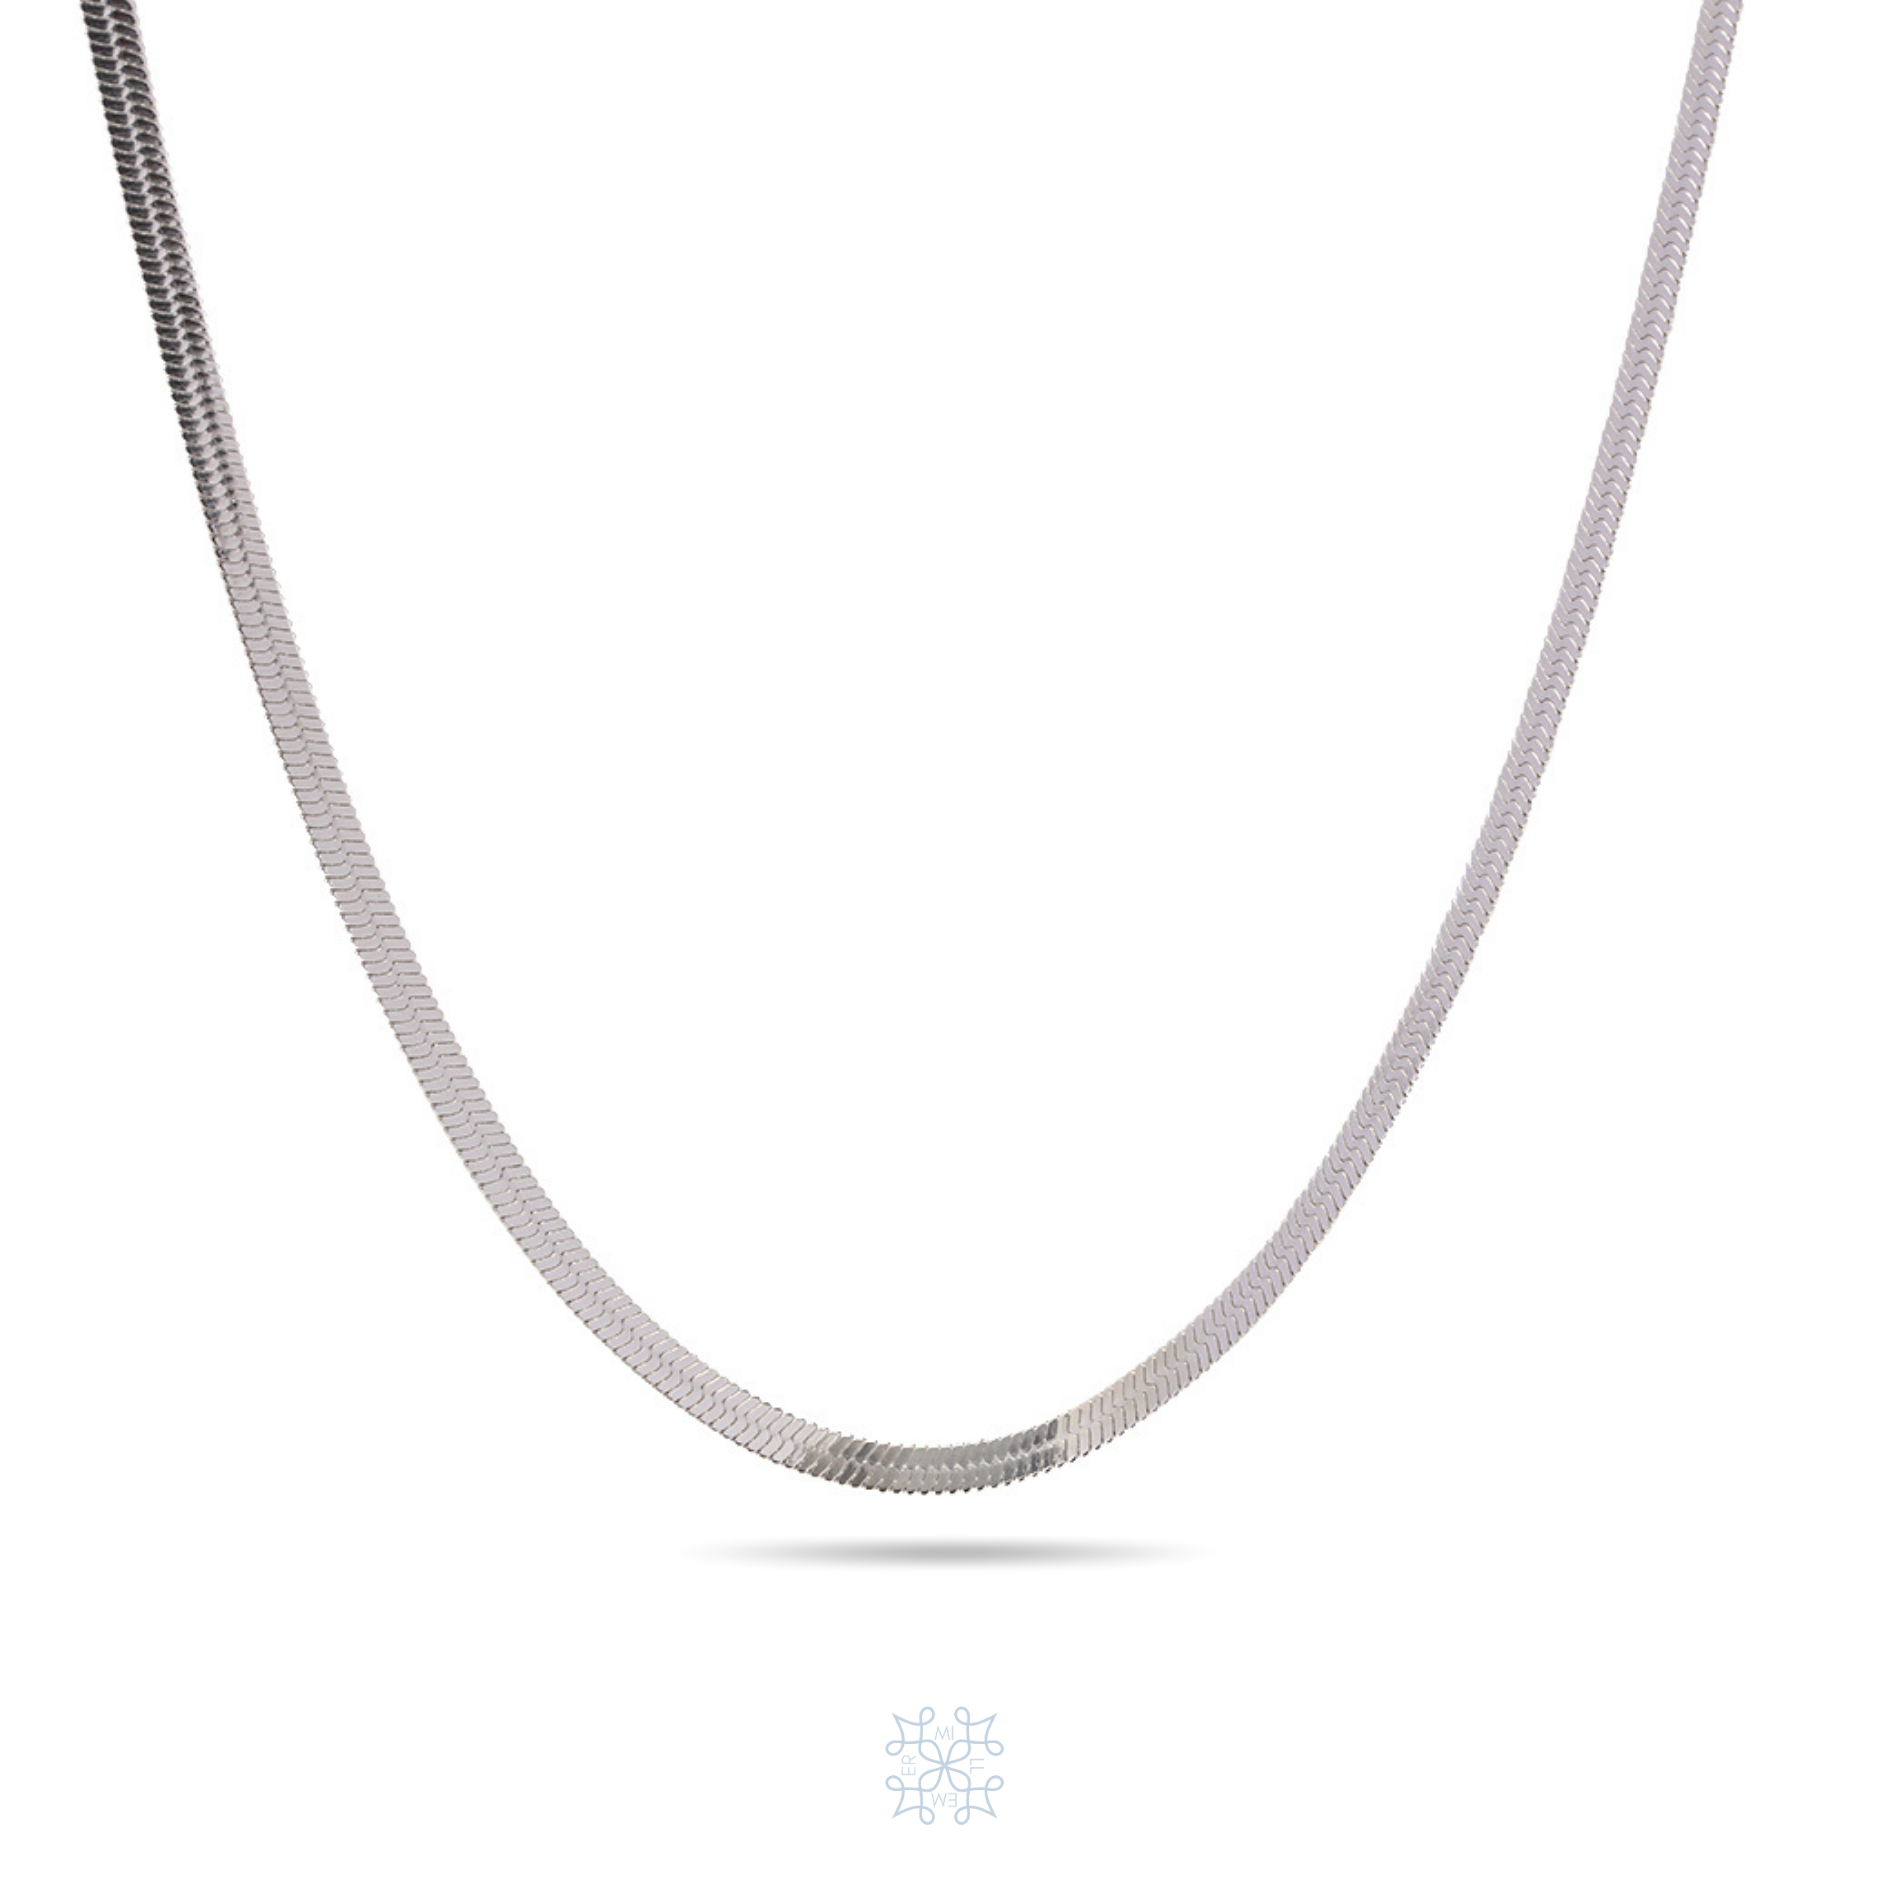 Herringbone patern silver chain. four mm width. Snake patern silver chain. HERRINGBONE Medium Silver Chain Necklace